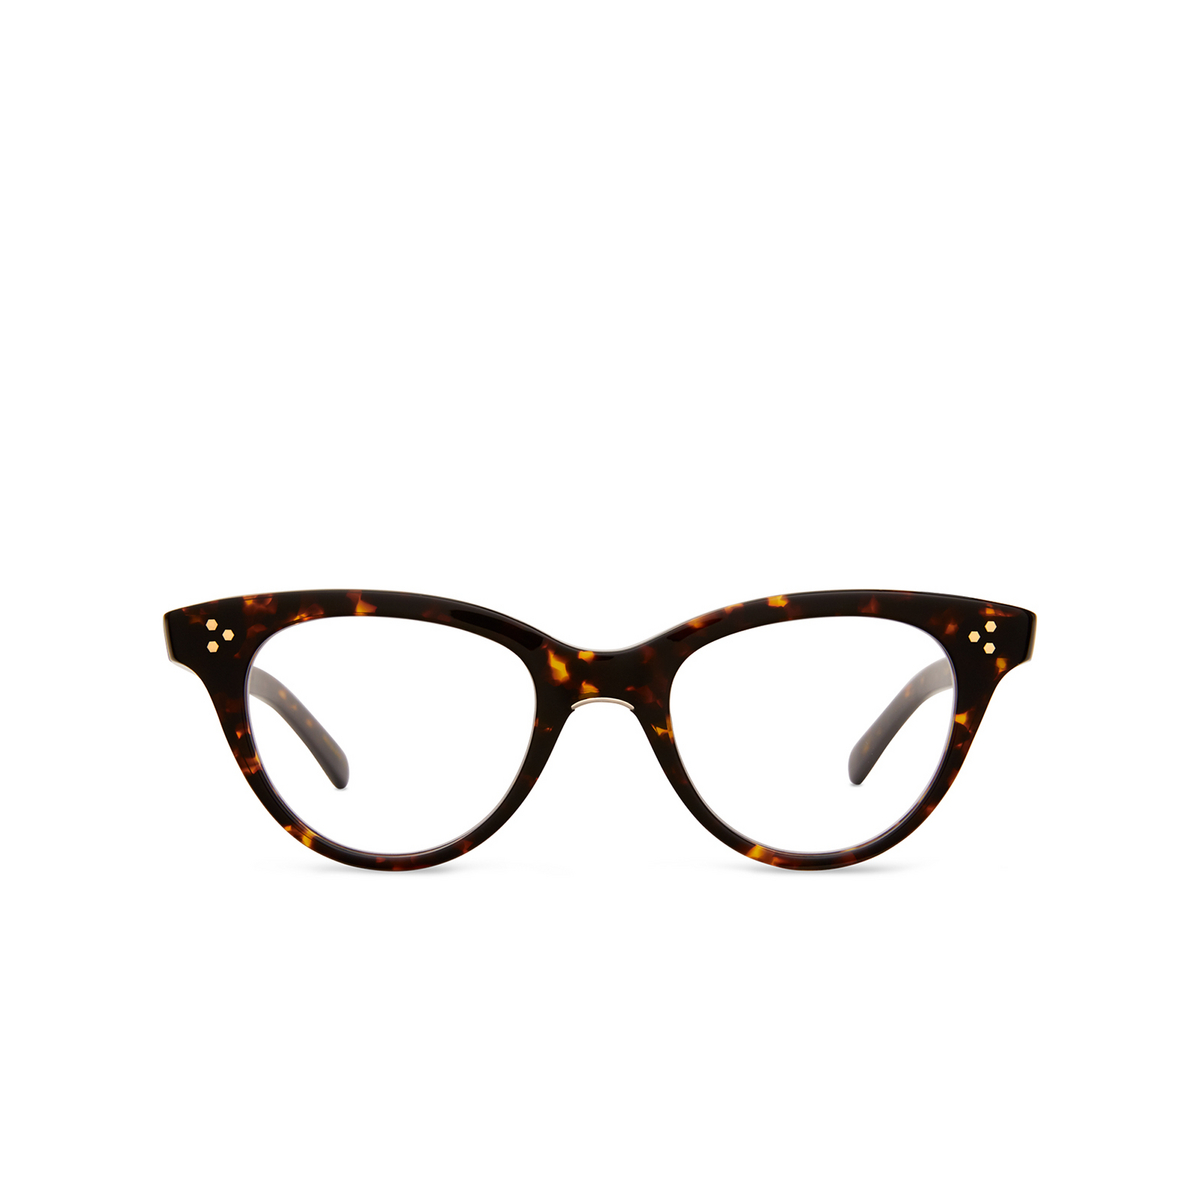 Mr. Leight KATHRYN C Eyeglasses BBY-12KG Bradbury-12K White Gold - front view